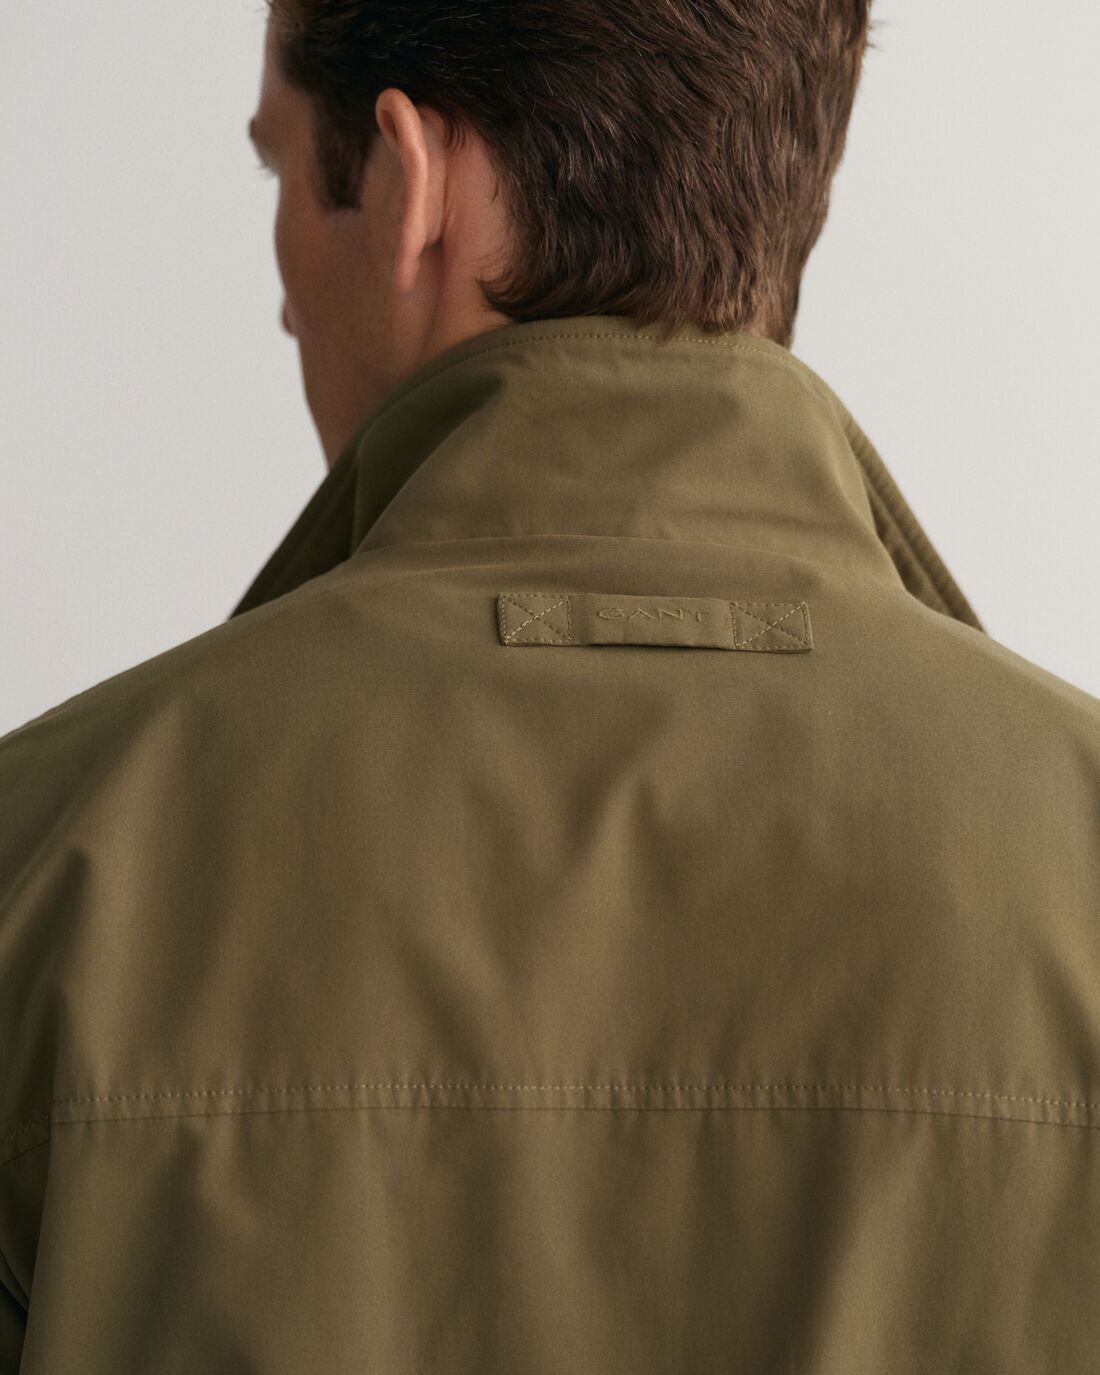 Green short outdoor jacket Gant - 7006322/301